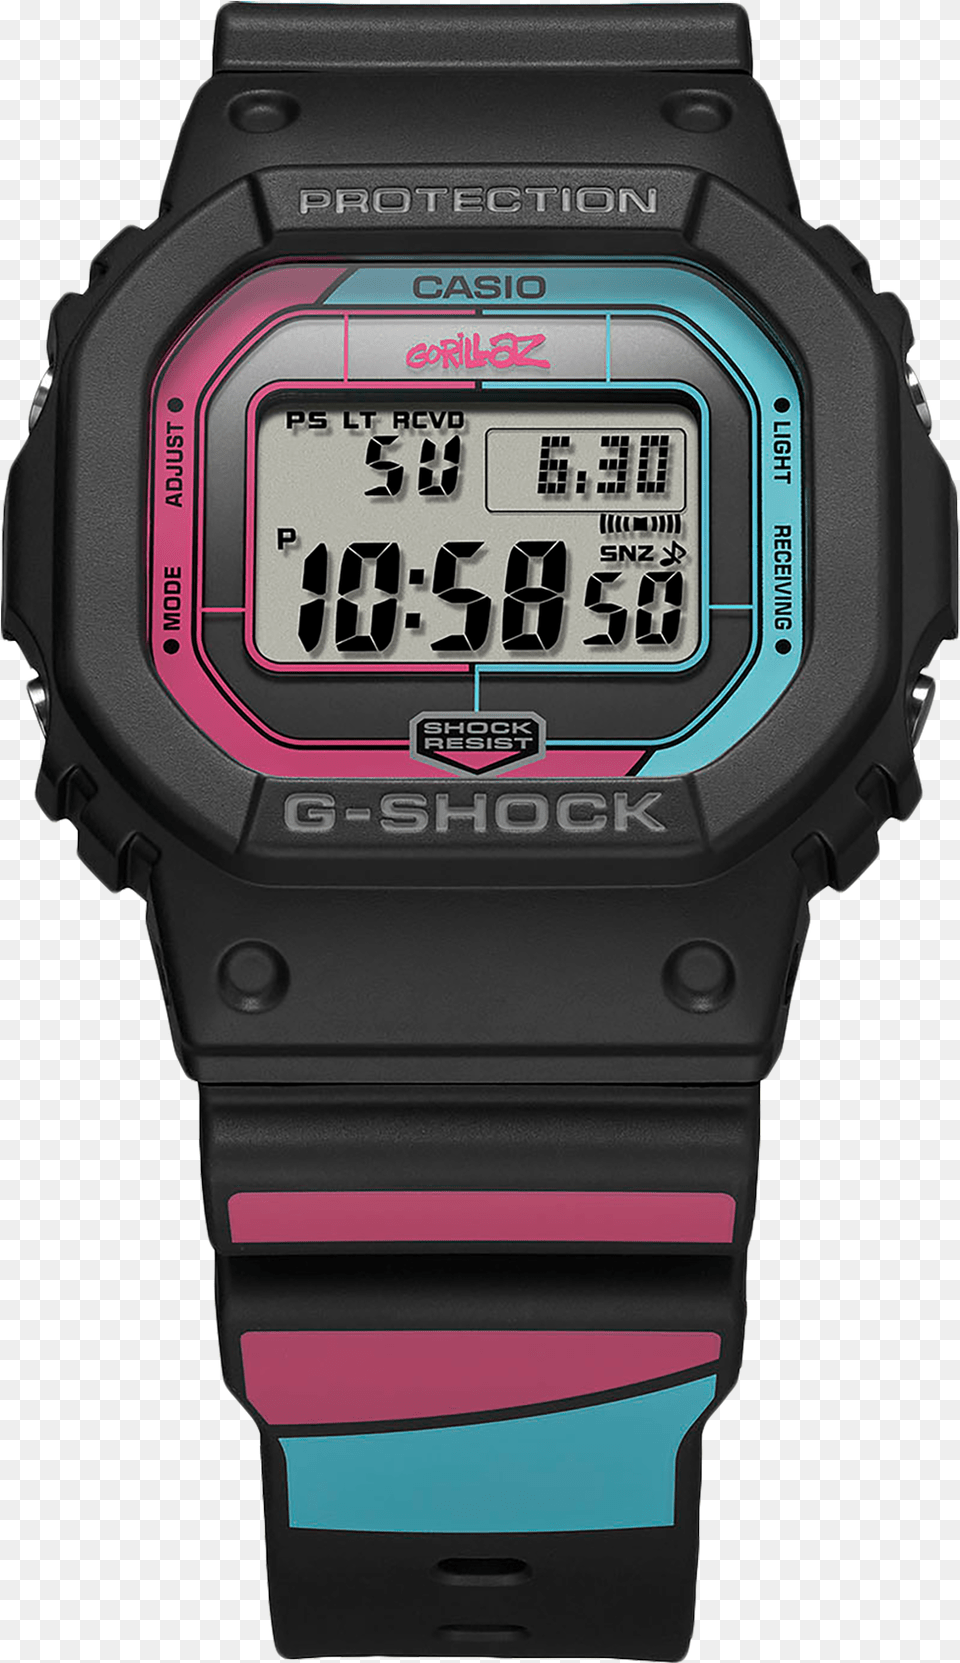 Gorillaz Wiki Casio G Shock Gorillaz, Wristwatch, Digital Watch, Electronics, Person Free Png Download